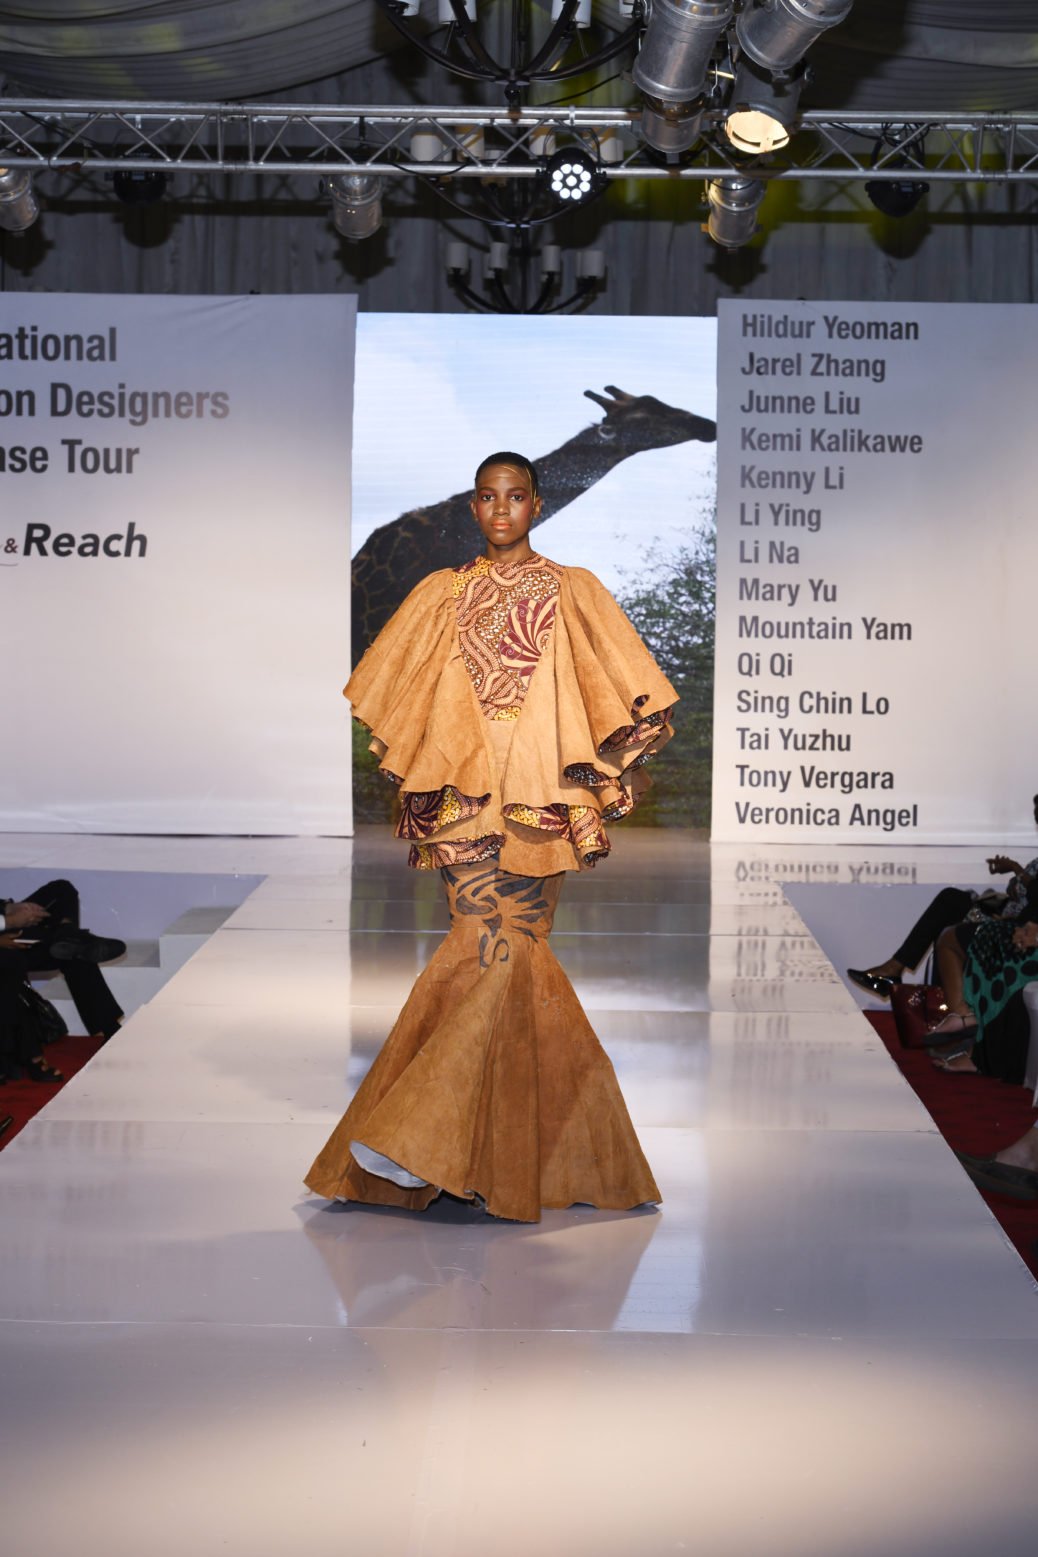 Showstopper designed by Kemi Kalikawe, a Tanzanian fashion designer